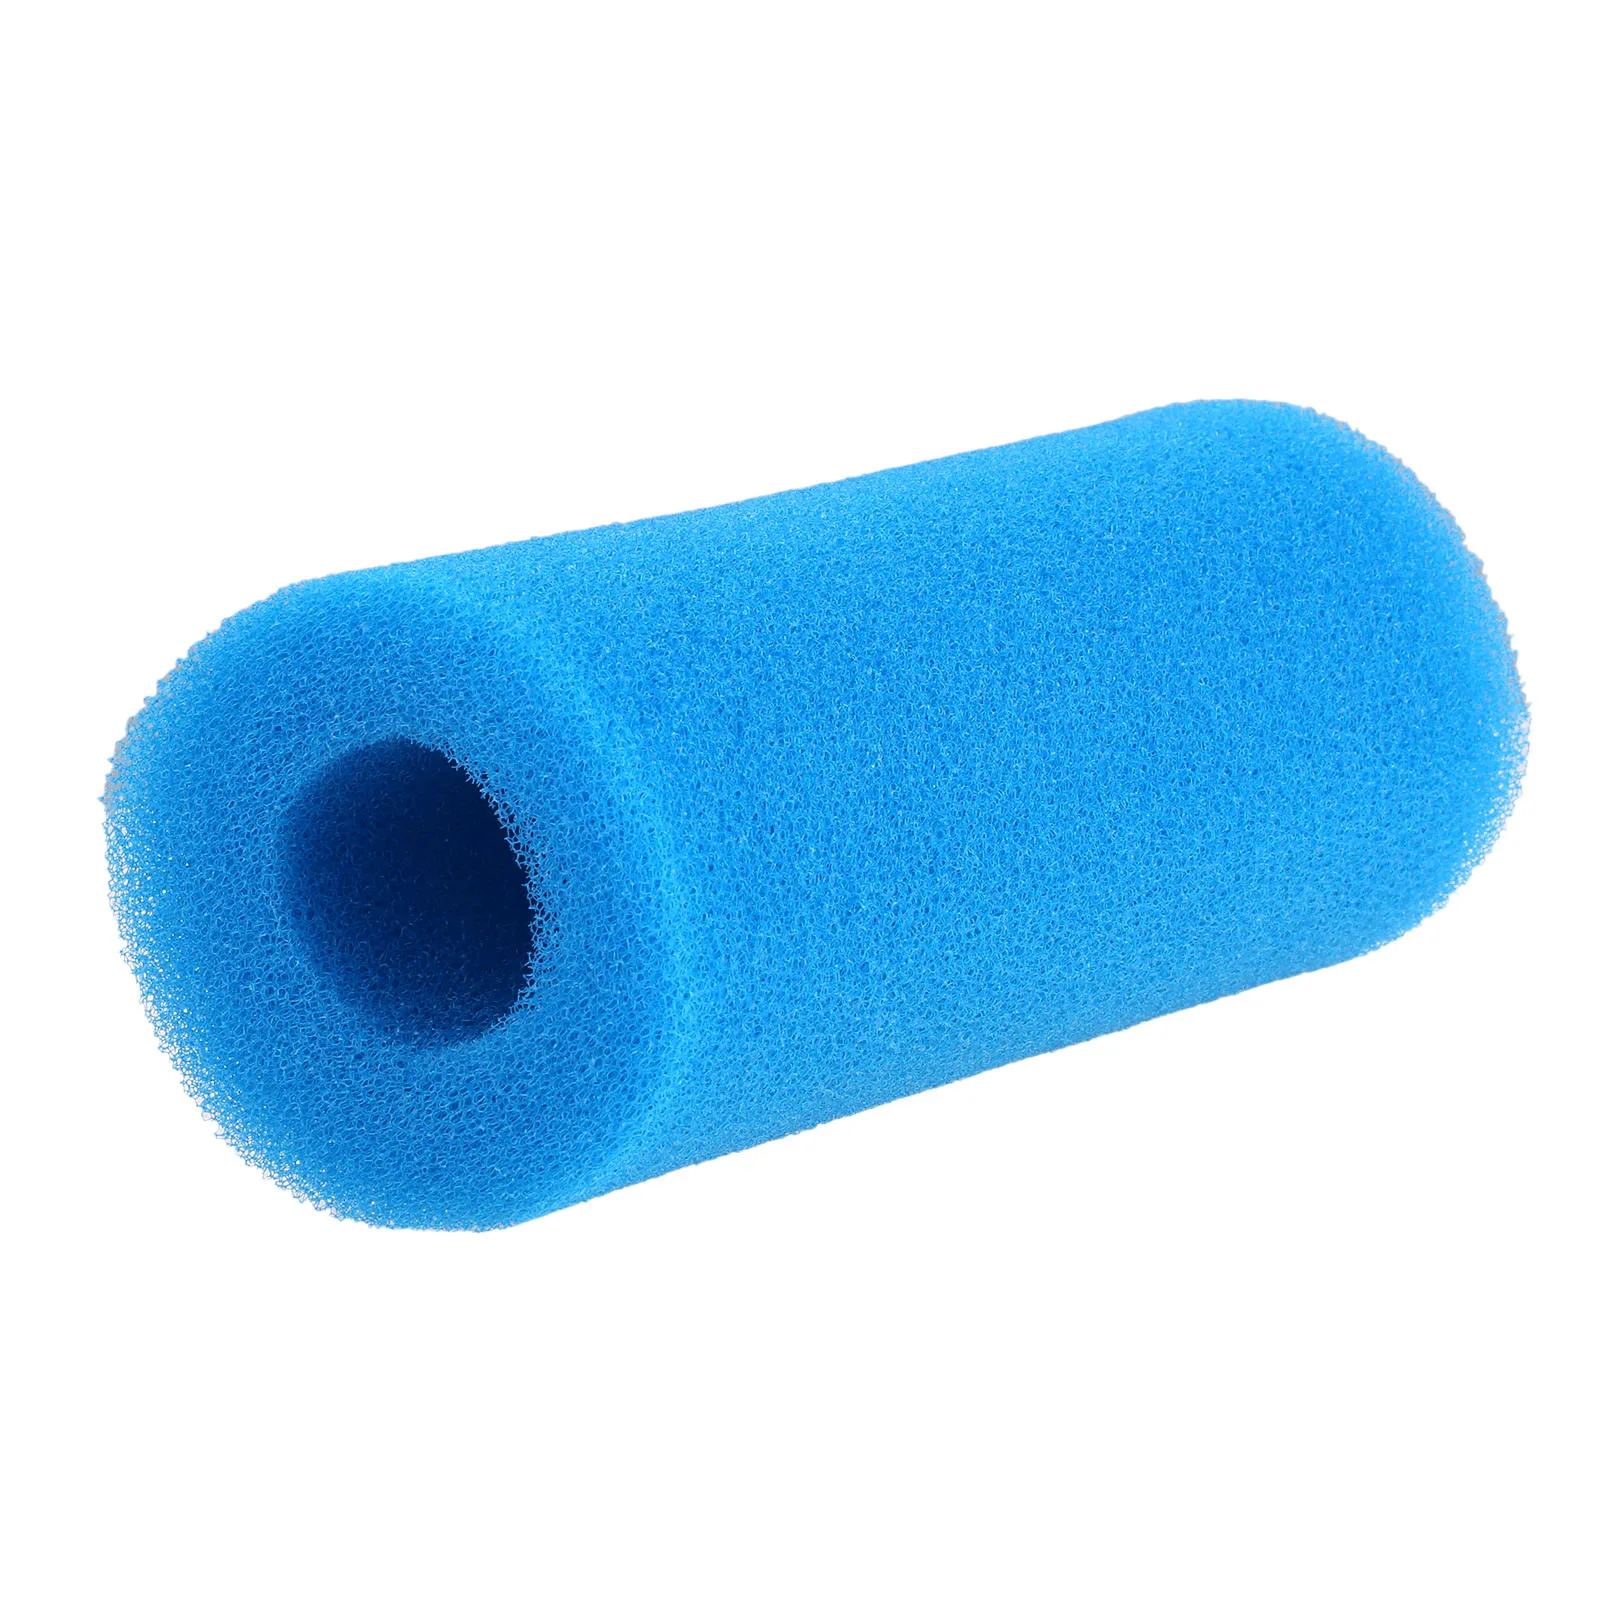 

Swimming Pool Foam Filter Sponge Intex Reusable Washable Biofoam Cleaner Tool 20*10*10cm Reused Maintain Replacement Durable